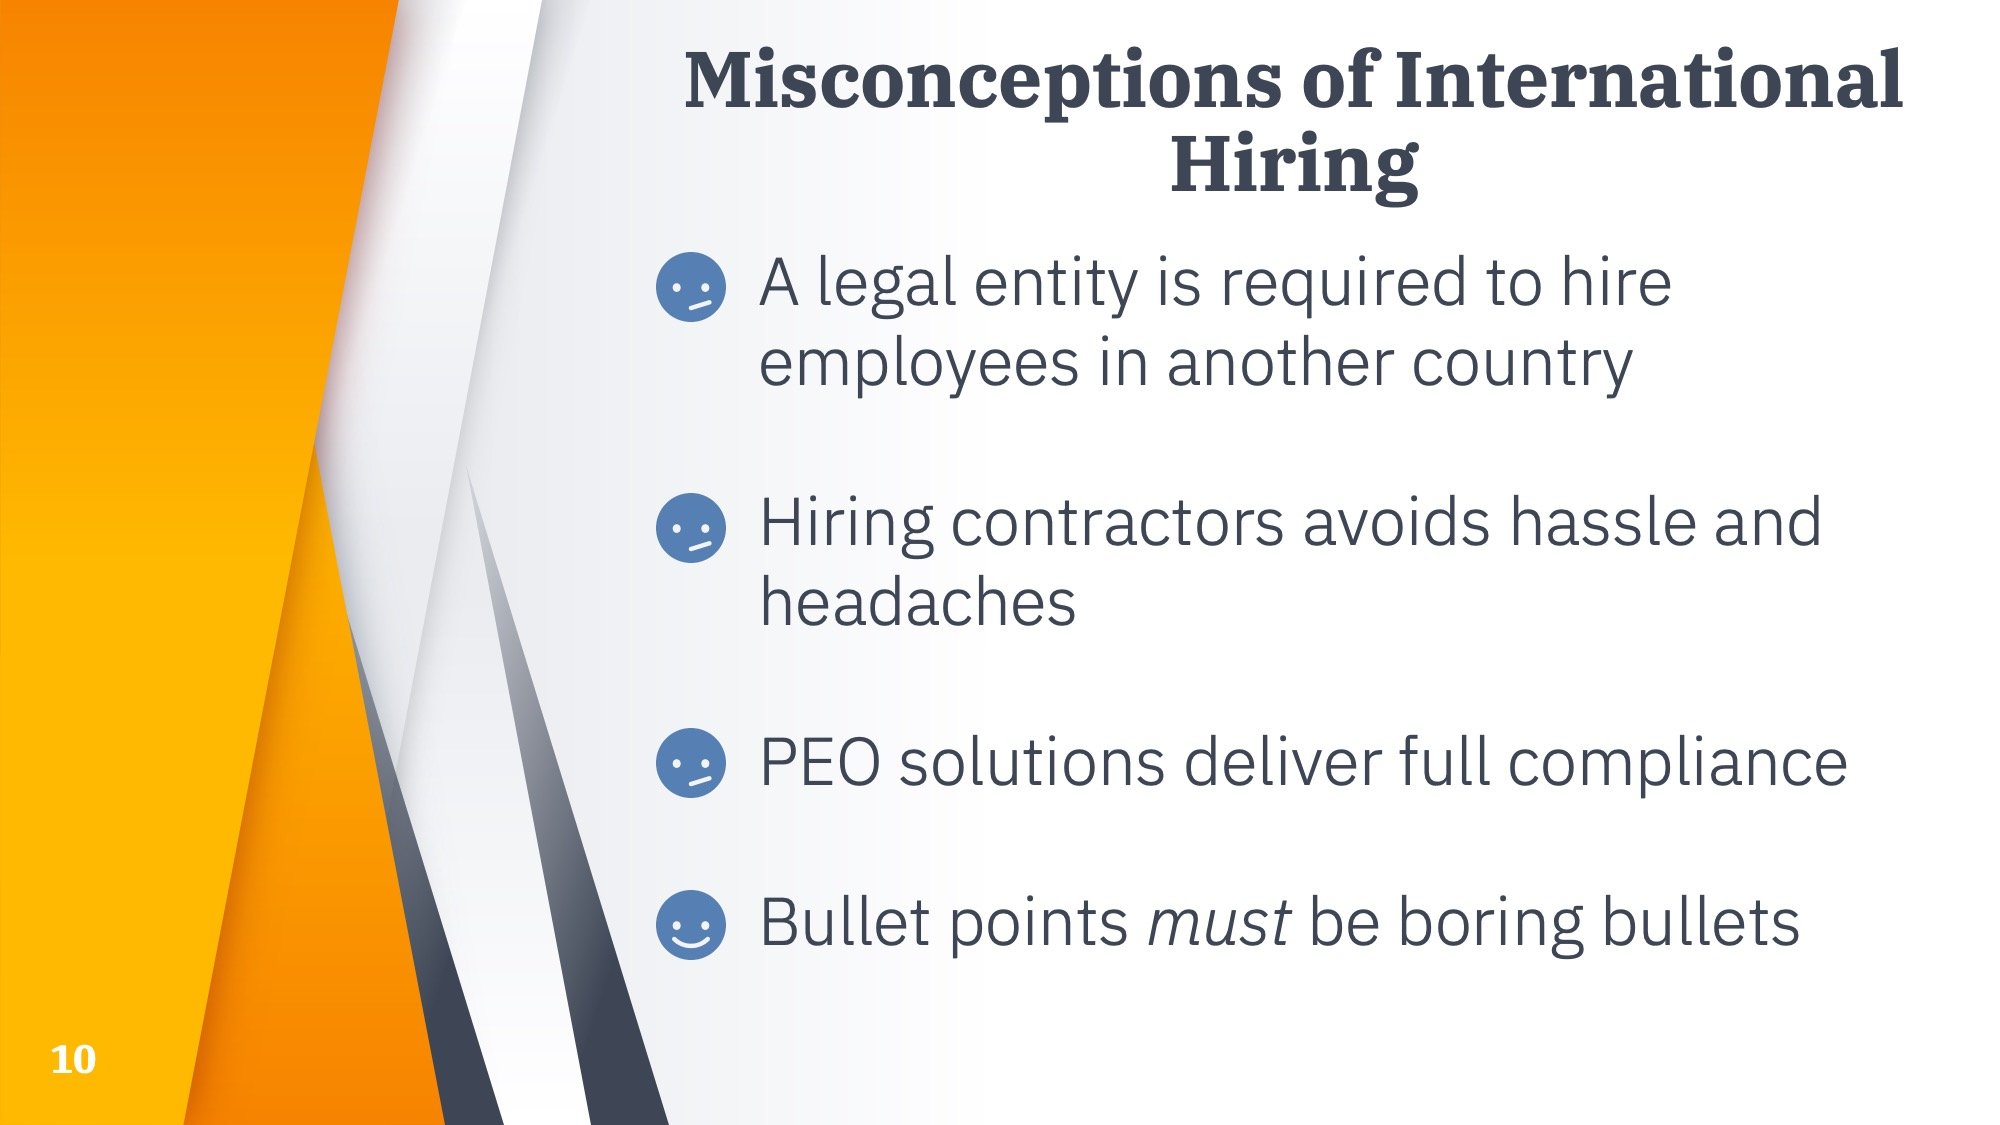 International hiring - misconceptions